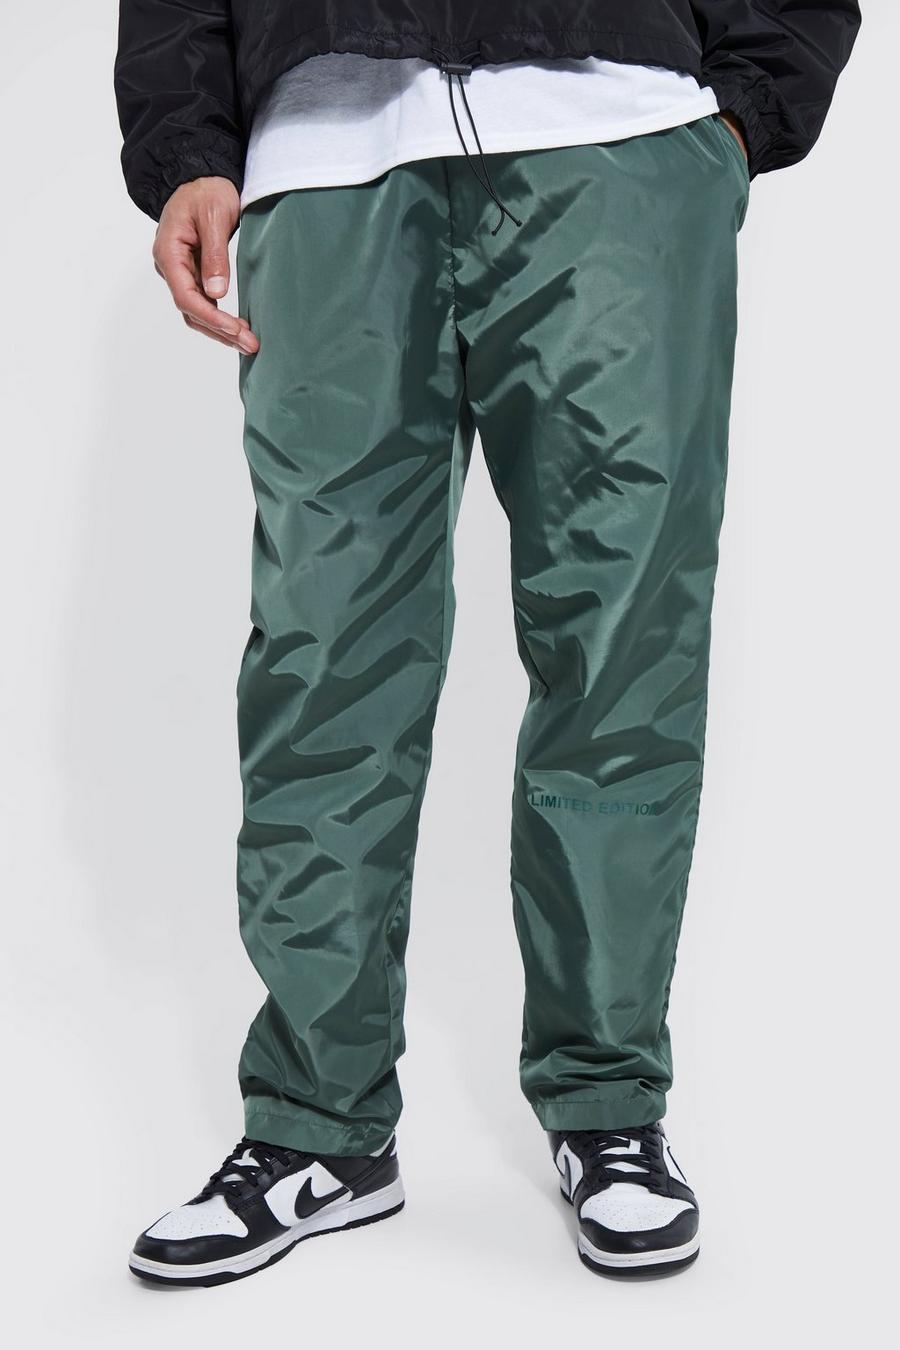 Pantalón Tall Limited Edition con cintura elástica, Forest gerde